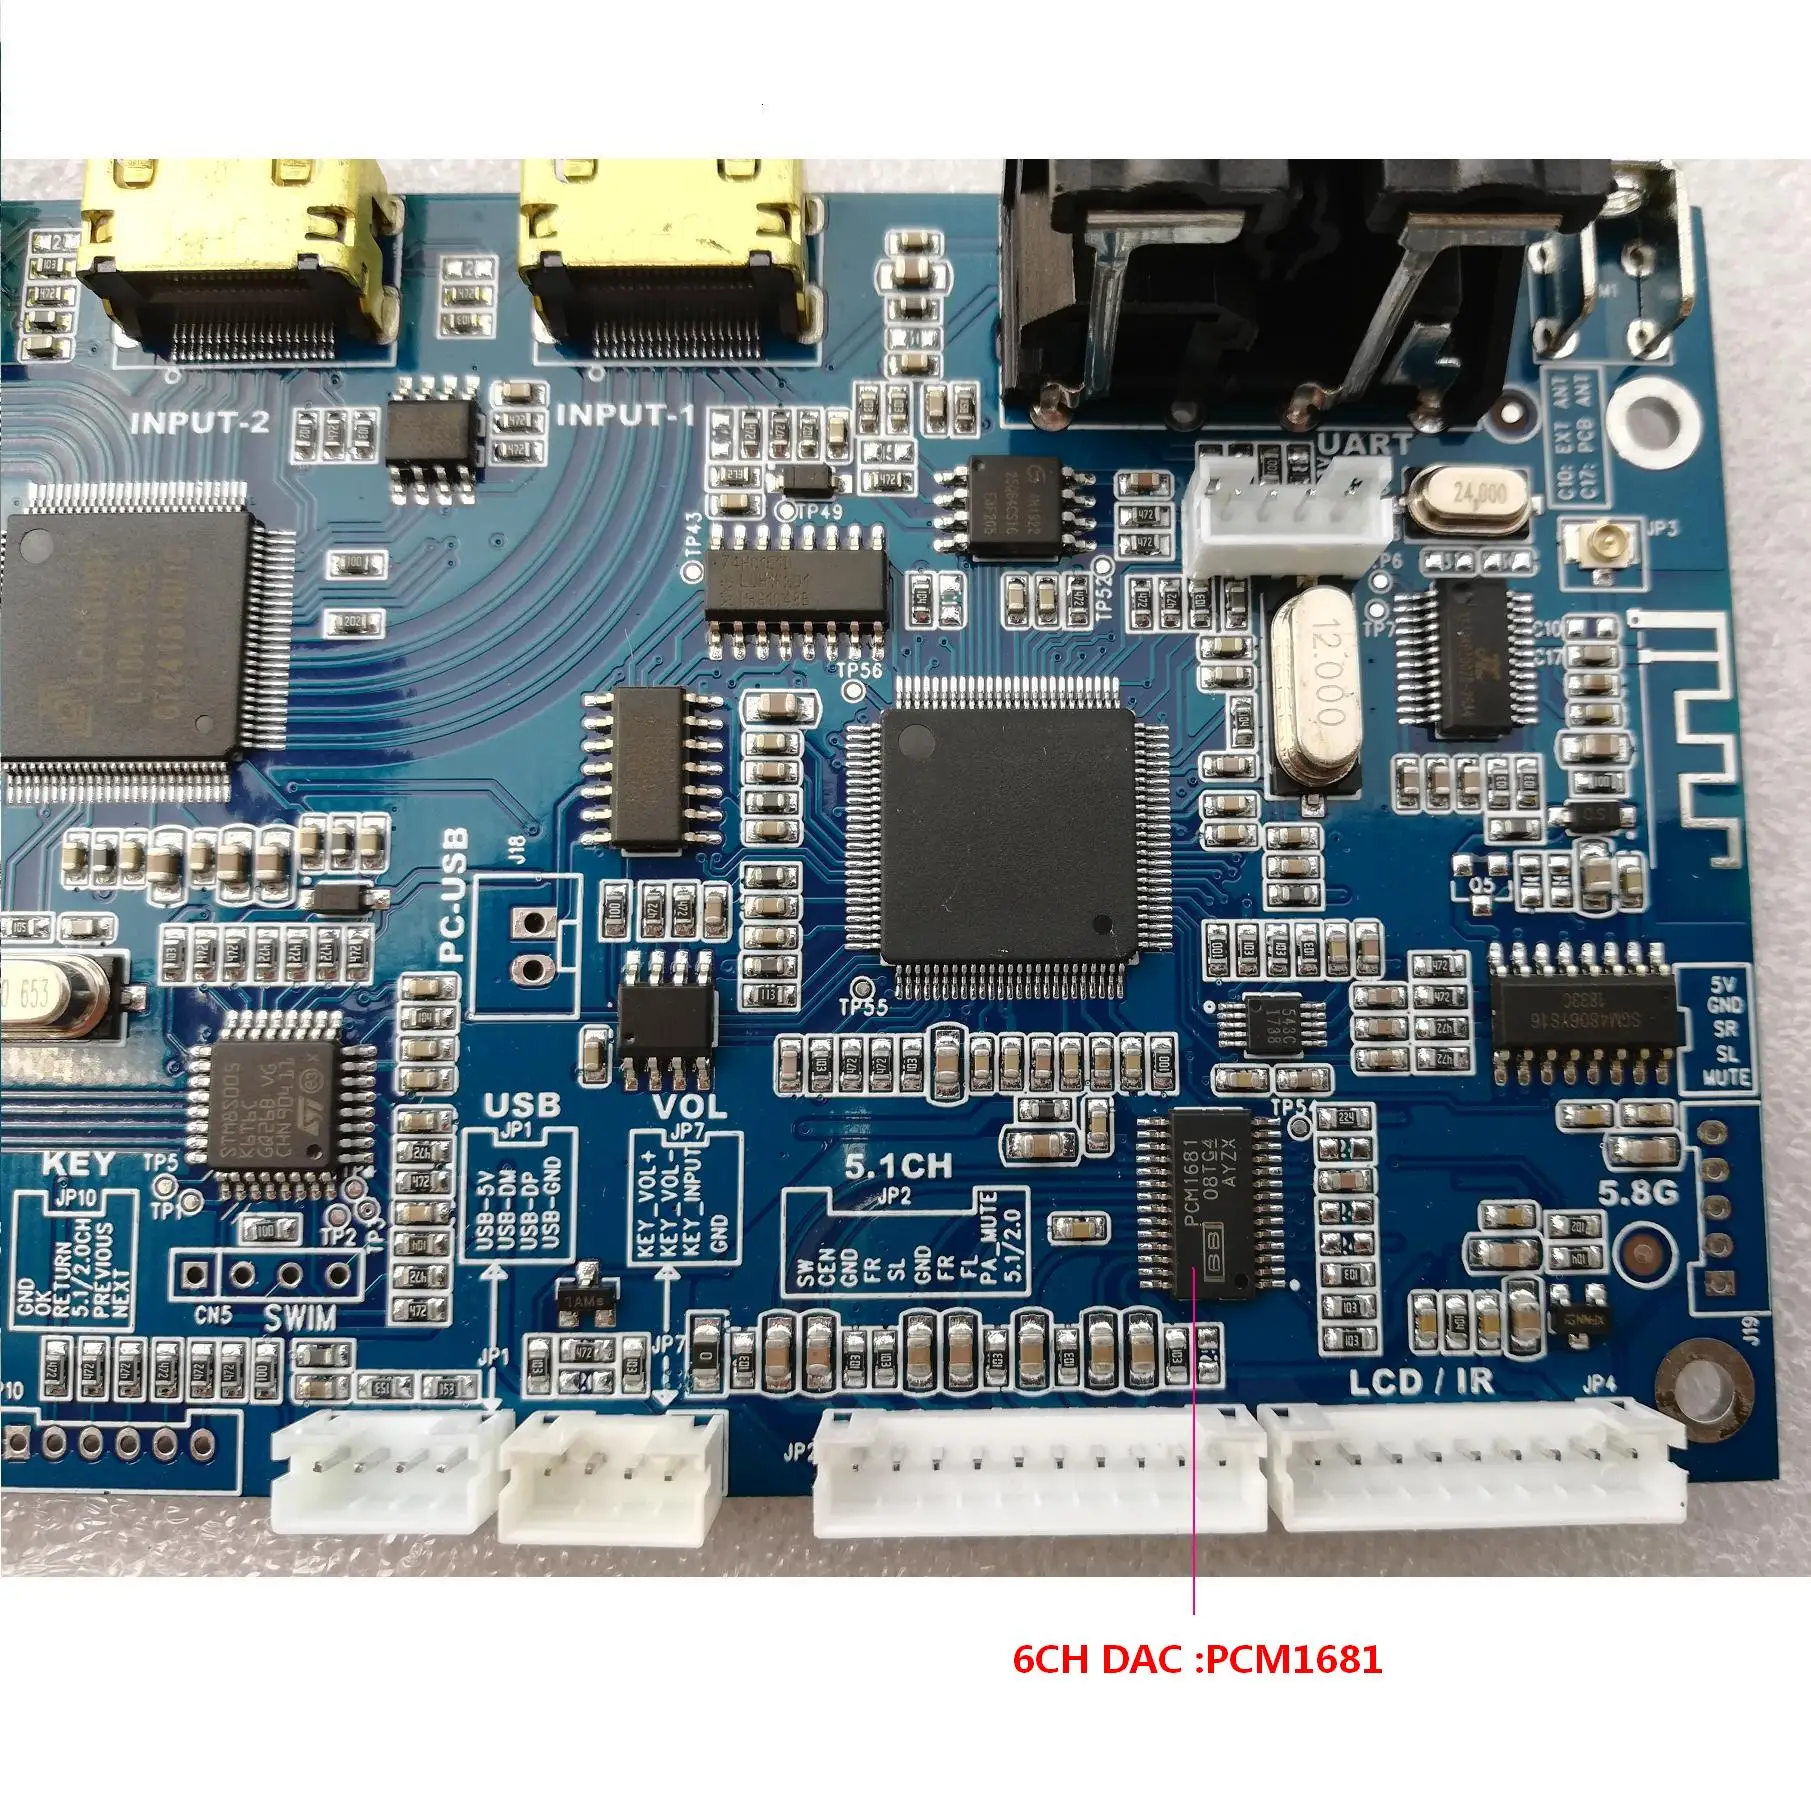 Новинка! DTS AC3 dolby 5,1 аудио декодер конвертер плата PCBA для DIY DAC HDMI экстрактор 4K* 2K Bluetooth BT цифровой SPDIF OPT COX ARC